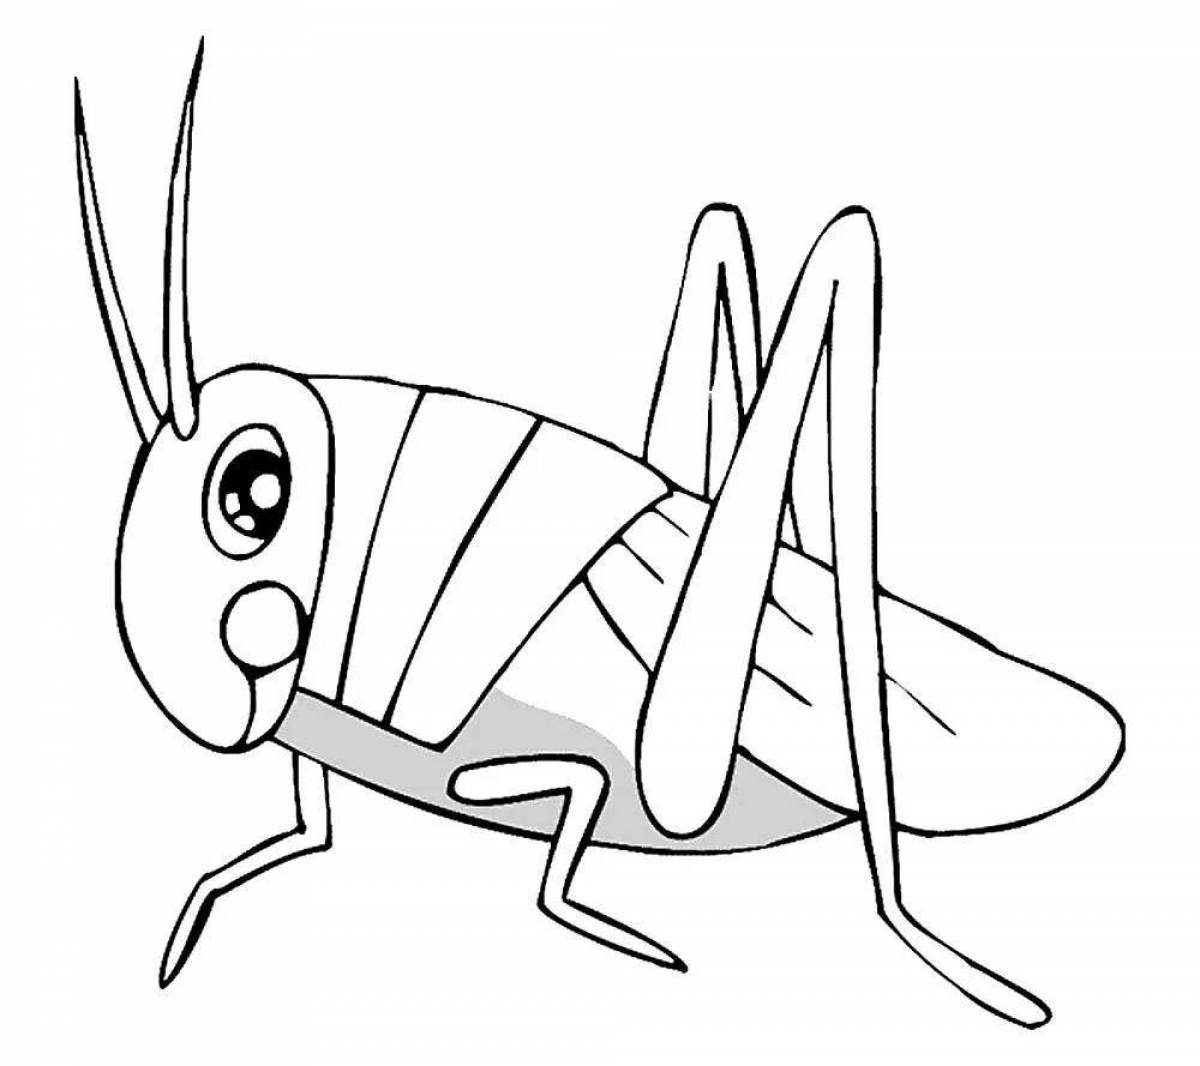 Grasshopper coloring book for kids